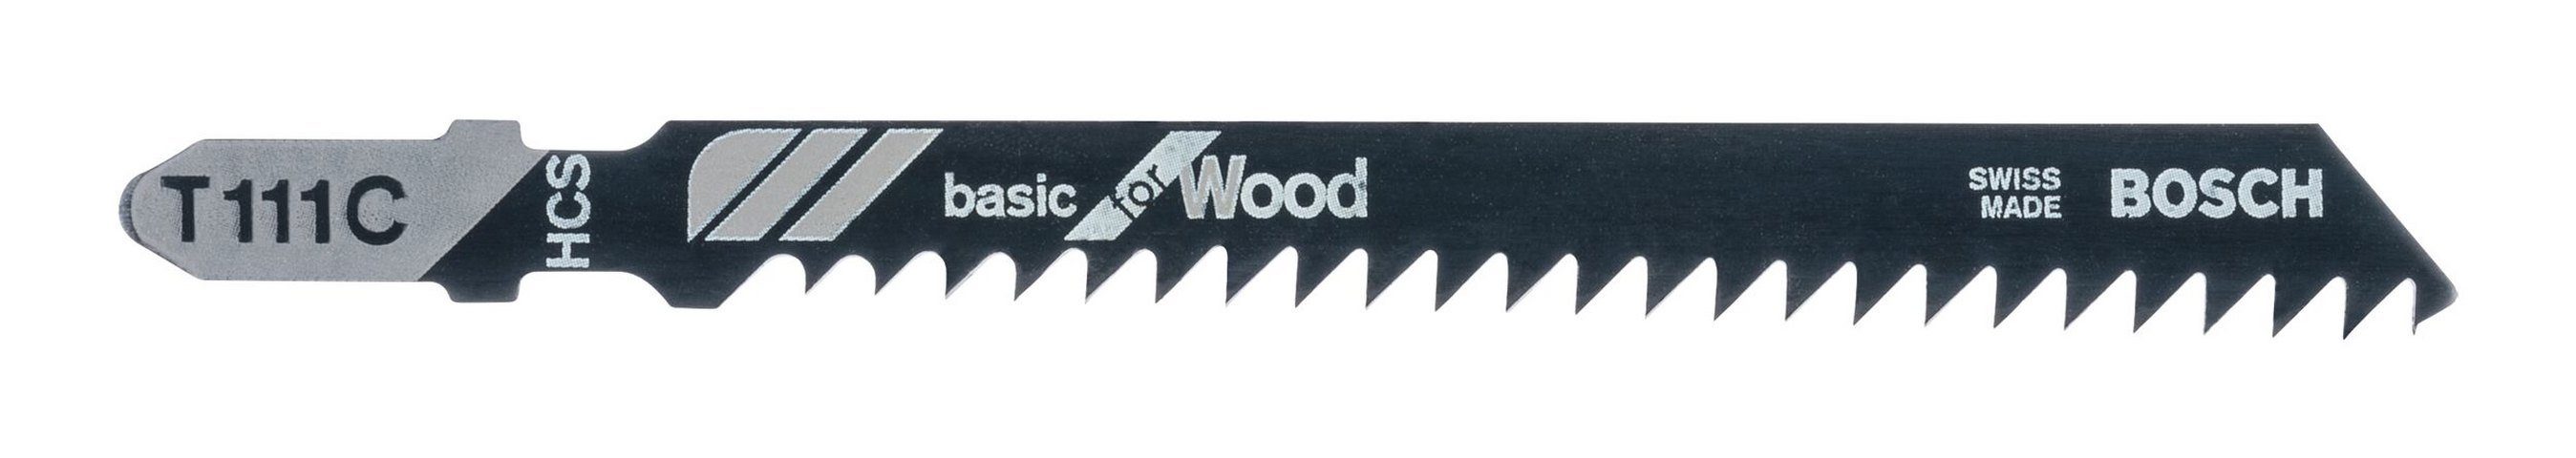 BOSCH Stichsägeblatt (25 Stück), T 111 C Basic for Wood - 25er-Pack